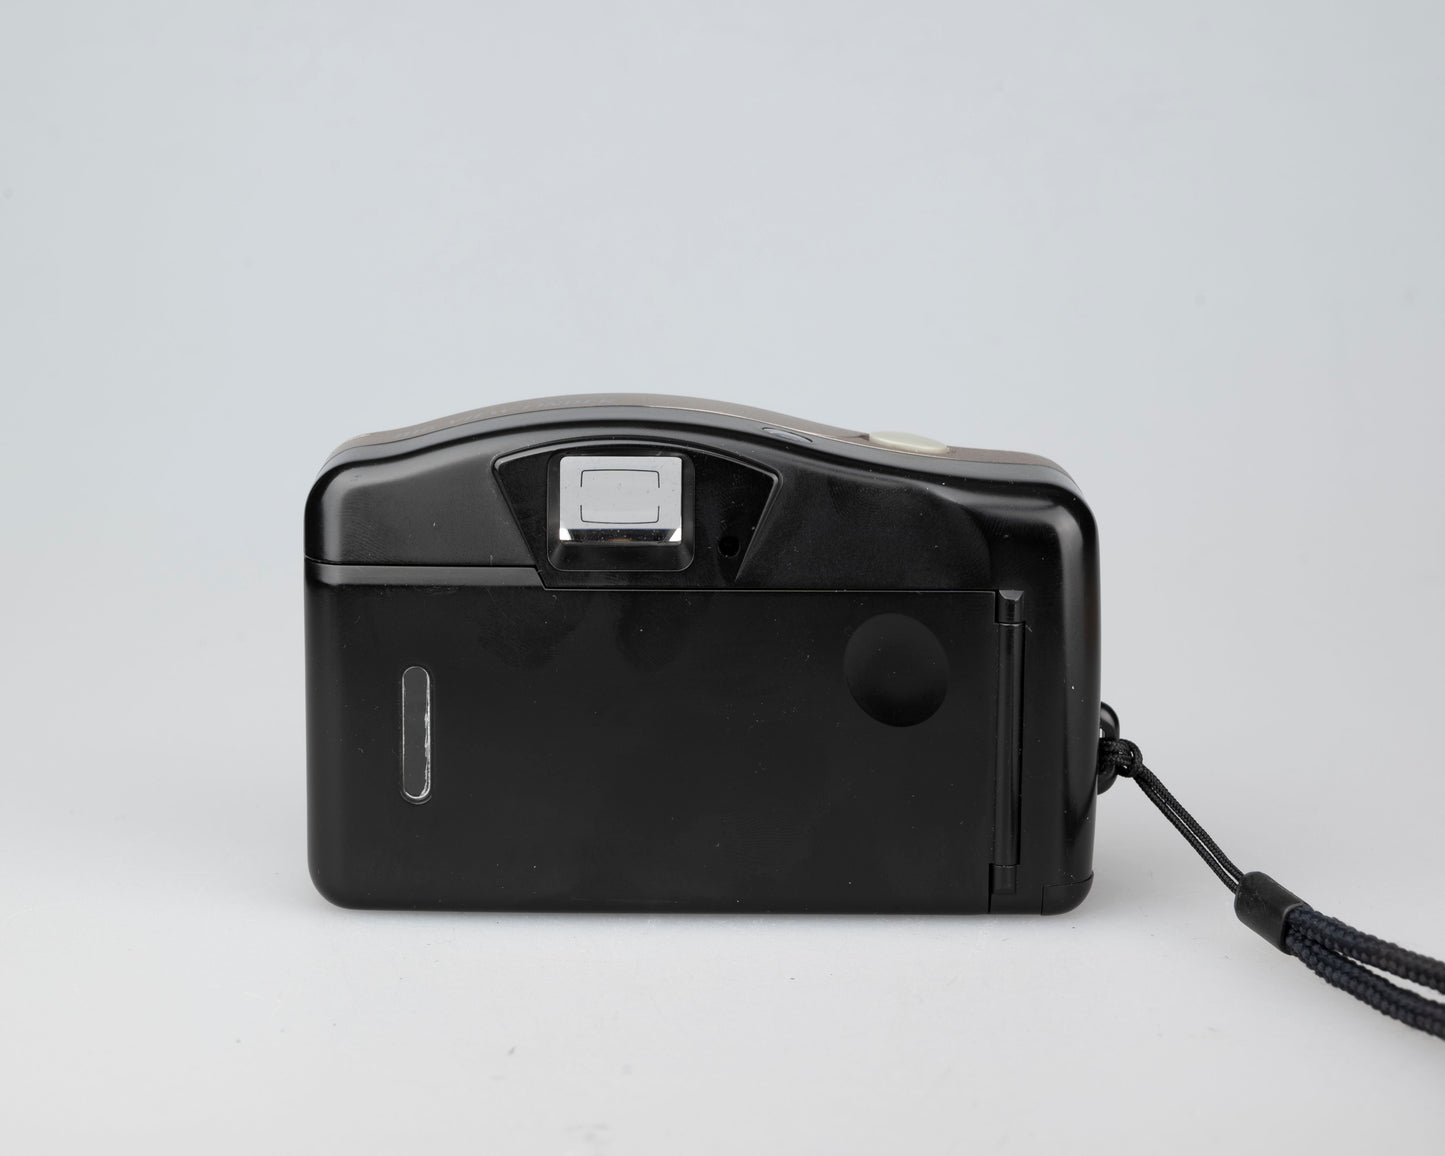 Fujifilm Clear Shot 10 Auto 35mm film camera w/ case